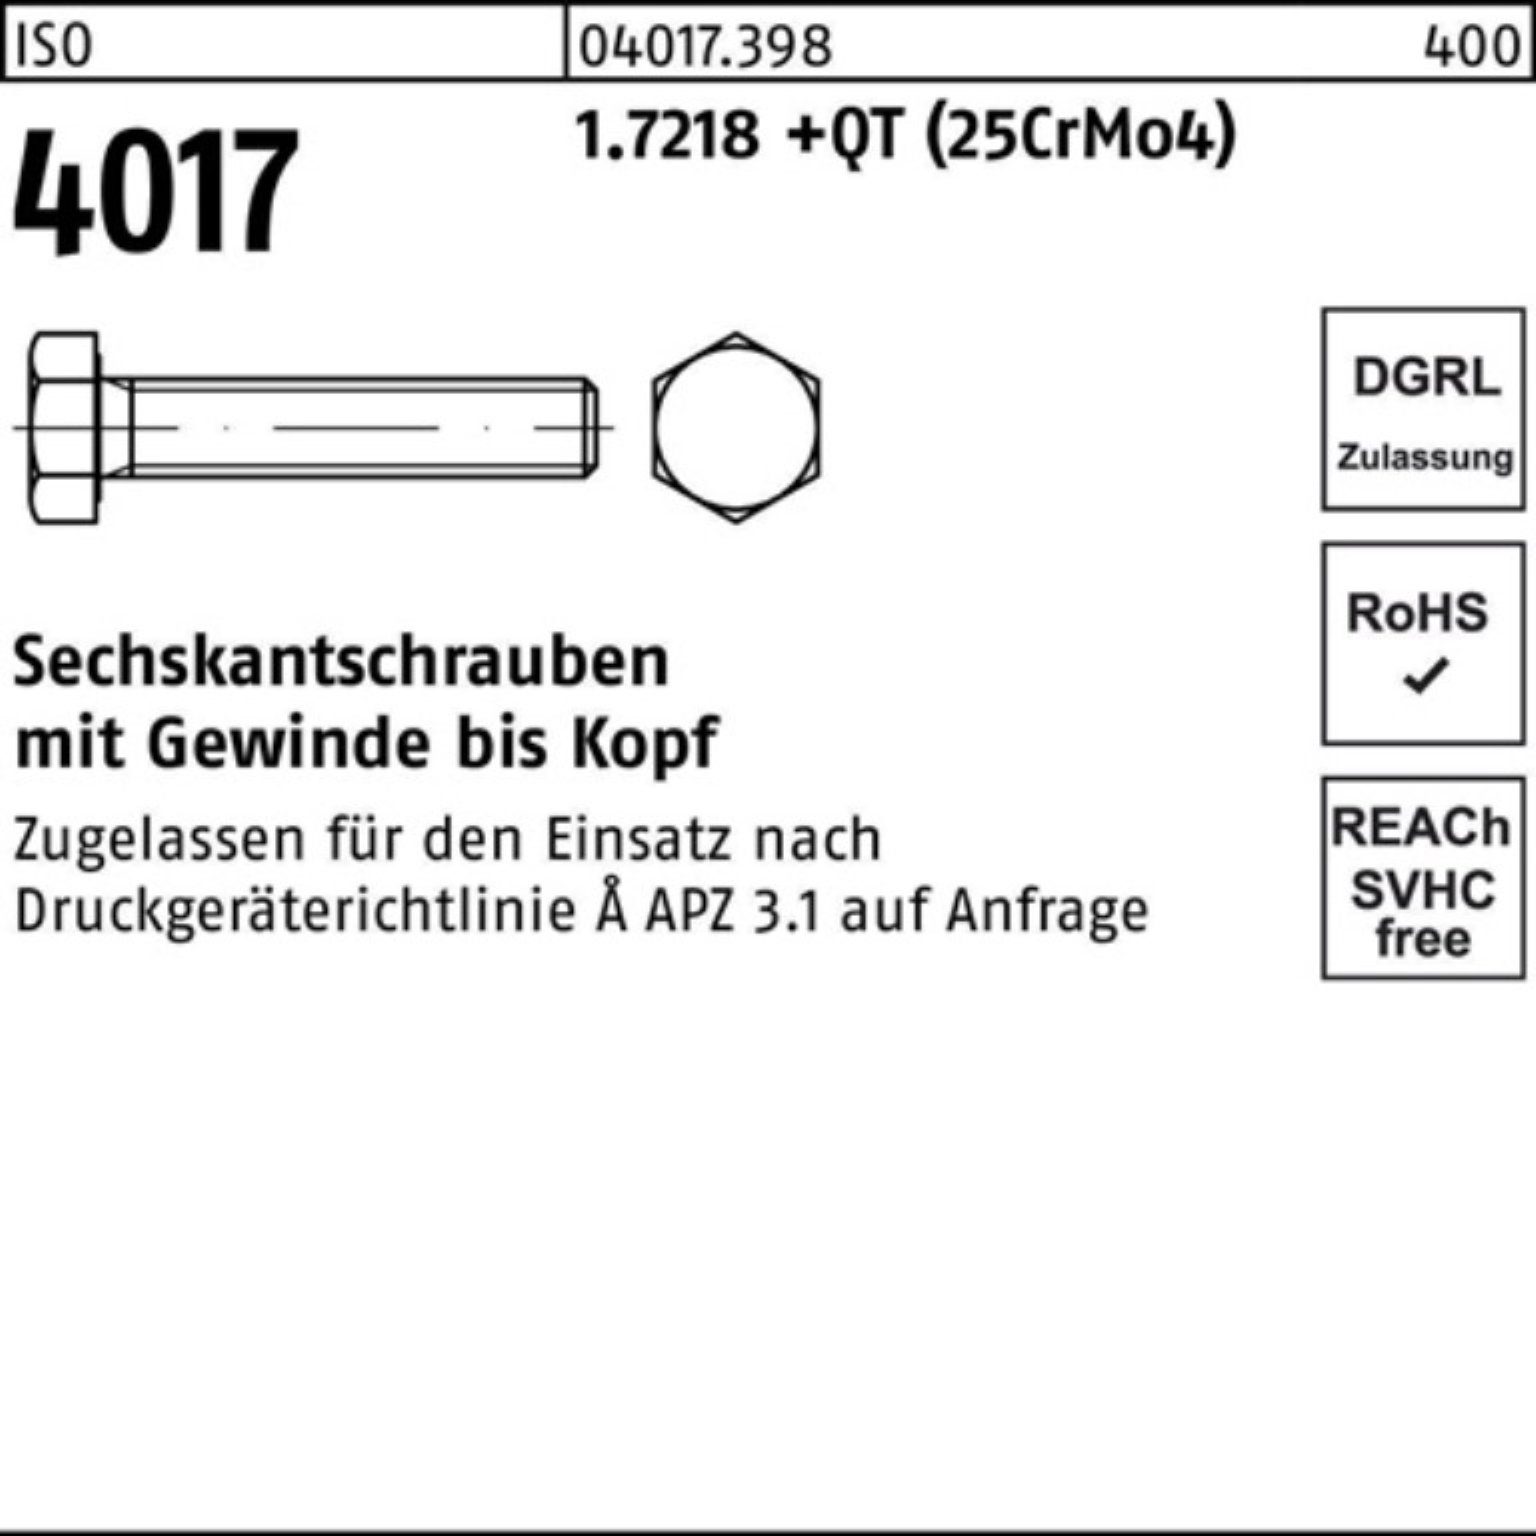 Sechskantschraube Sechskantschraube Bufab 1.7218 M20x (25CrMo4) ISO VG +QT 100er 50 Pack 4017